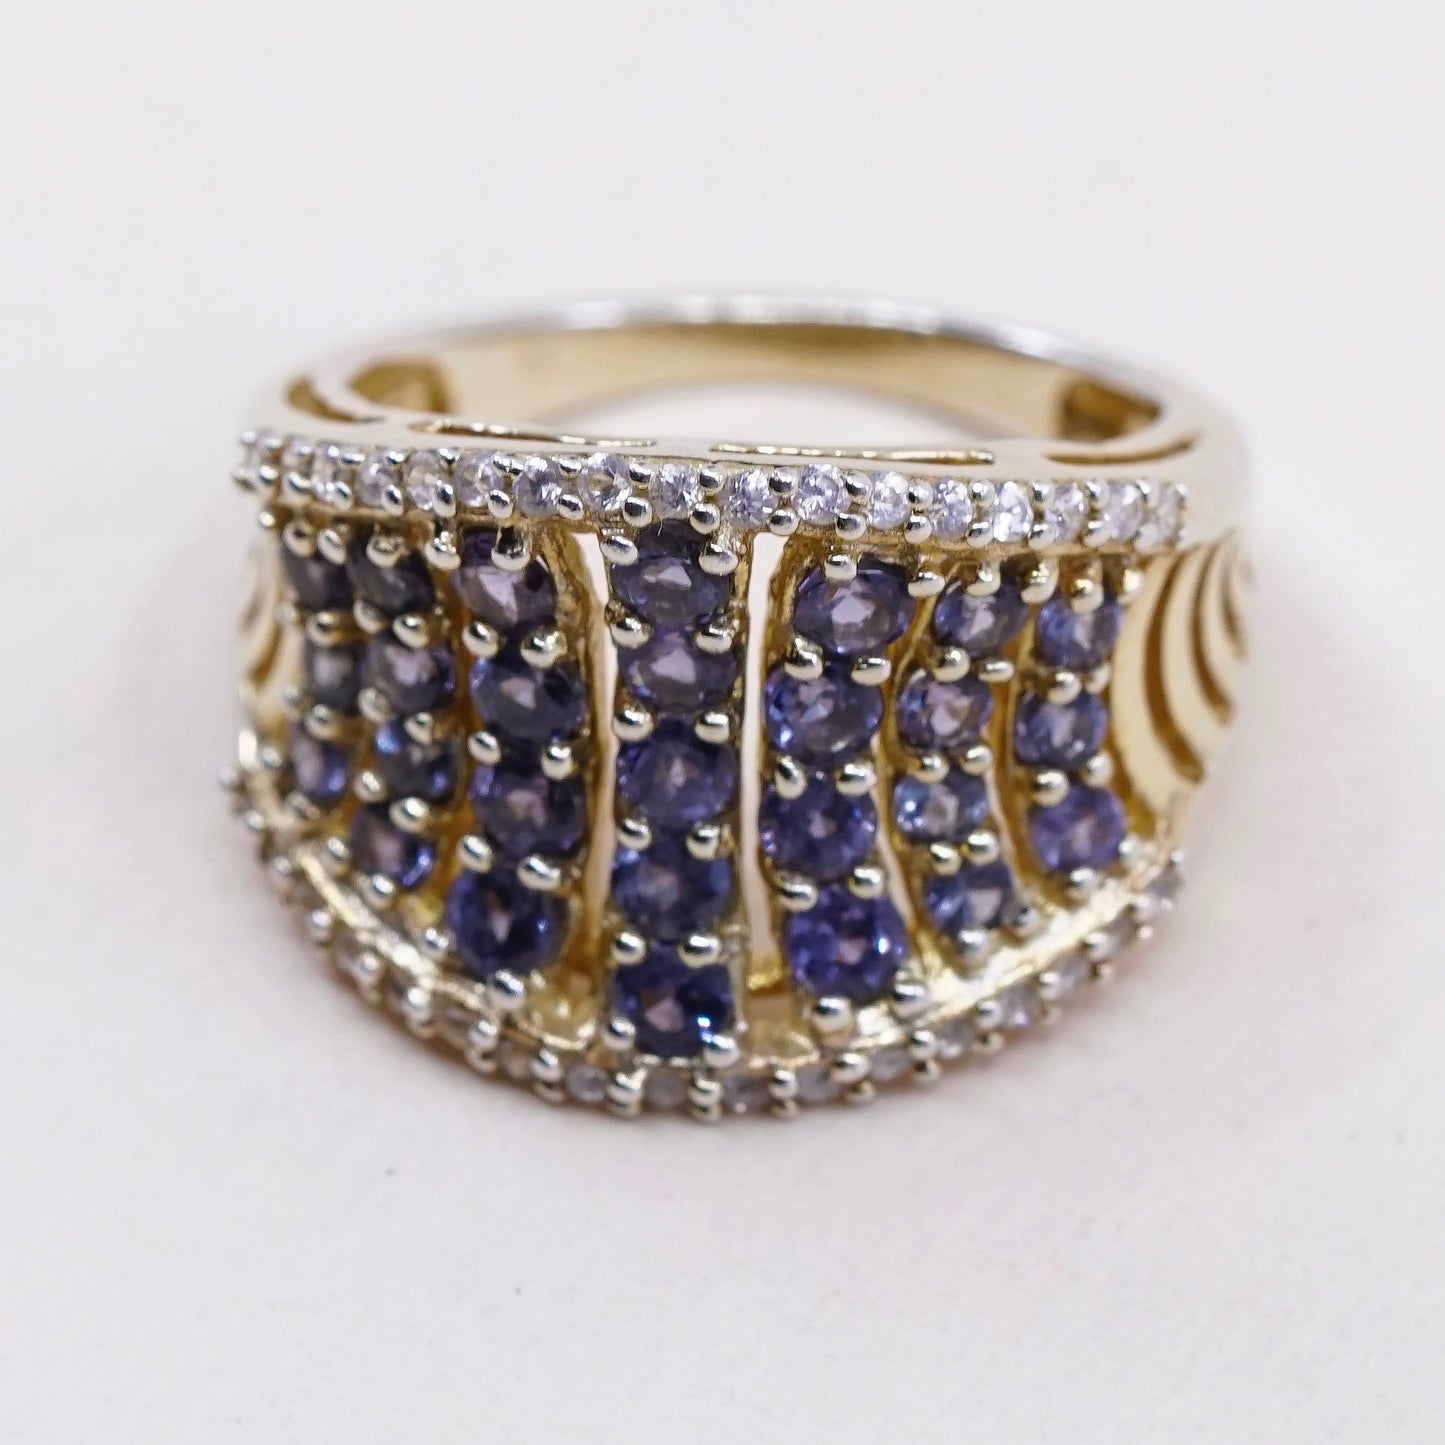 sz 7, Vermeil gold sterling silver ring, 925 band w/ cluster amethyst N diamond